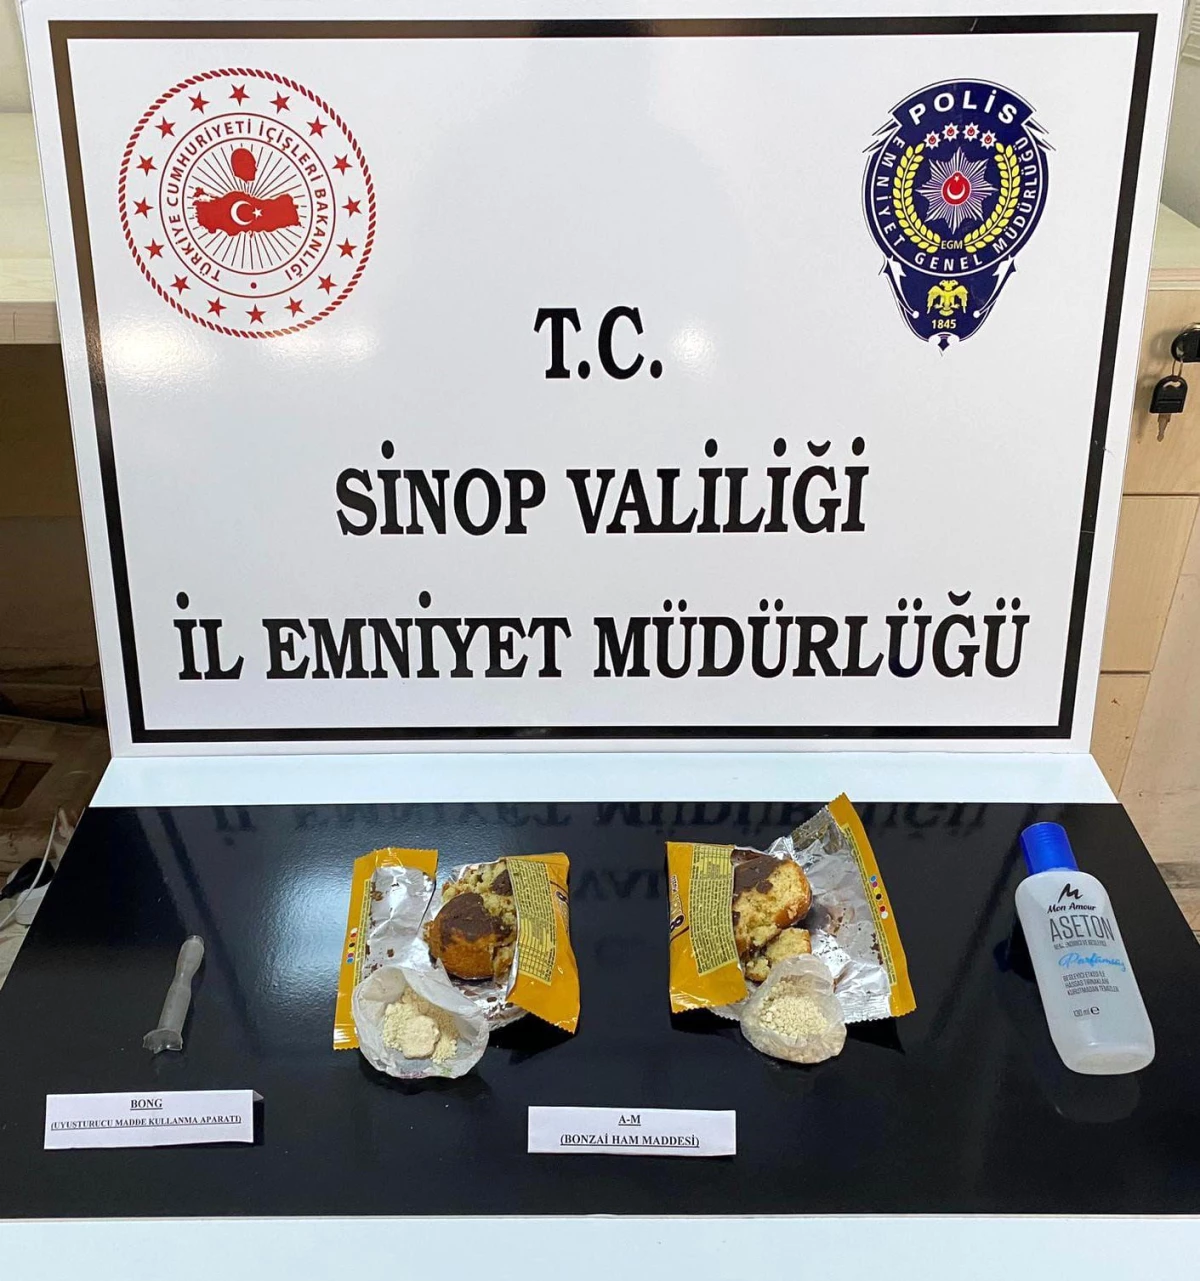 Sinop'ta kek paketlerinde bonzai ele geçirildi